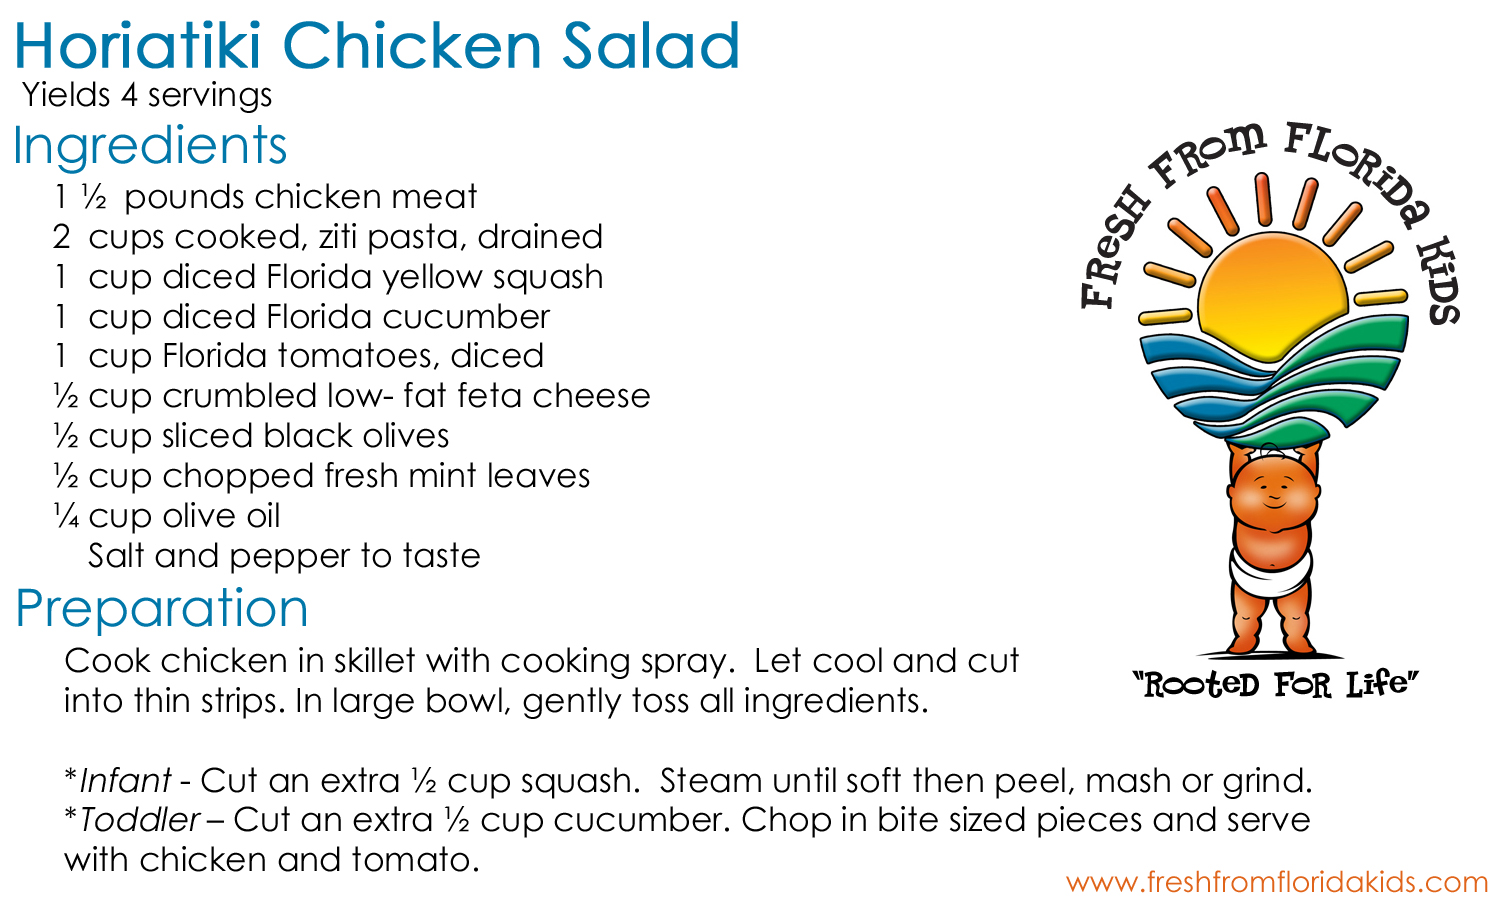 Chicken Salad Recipe Card